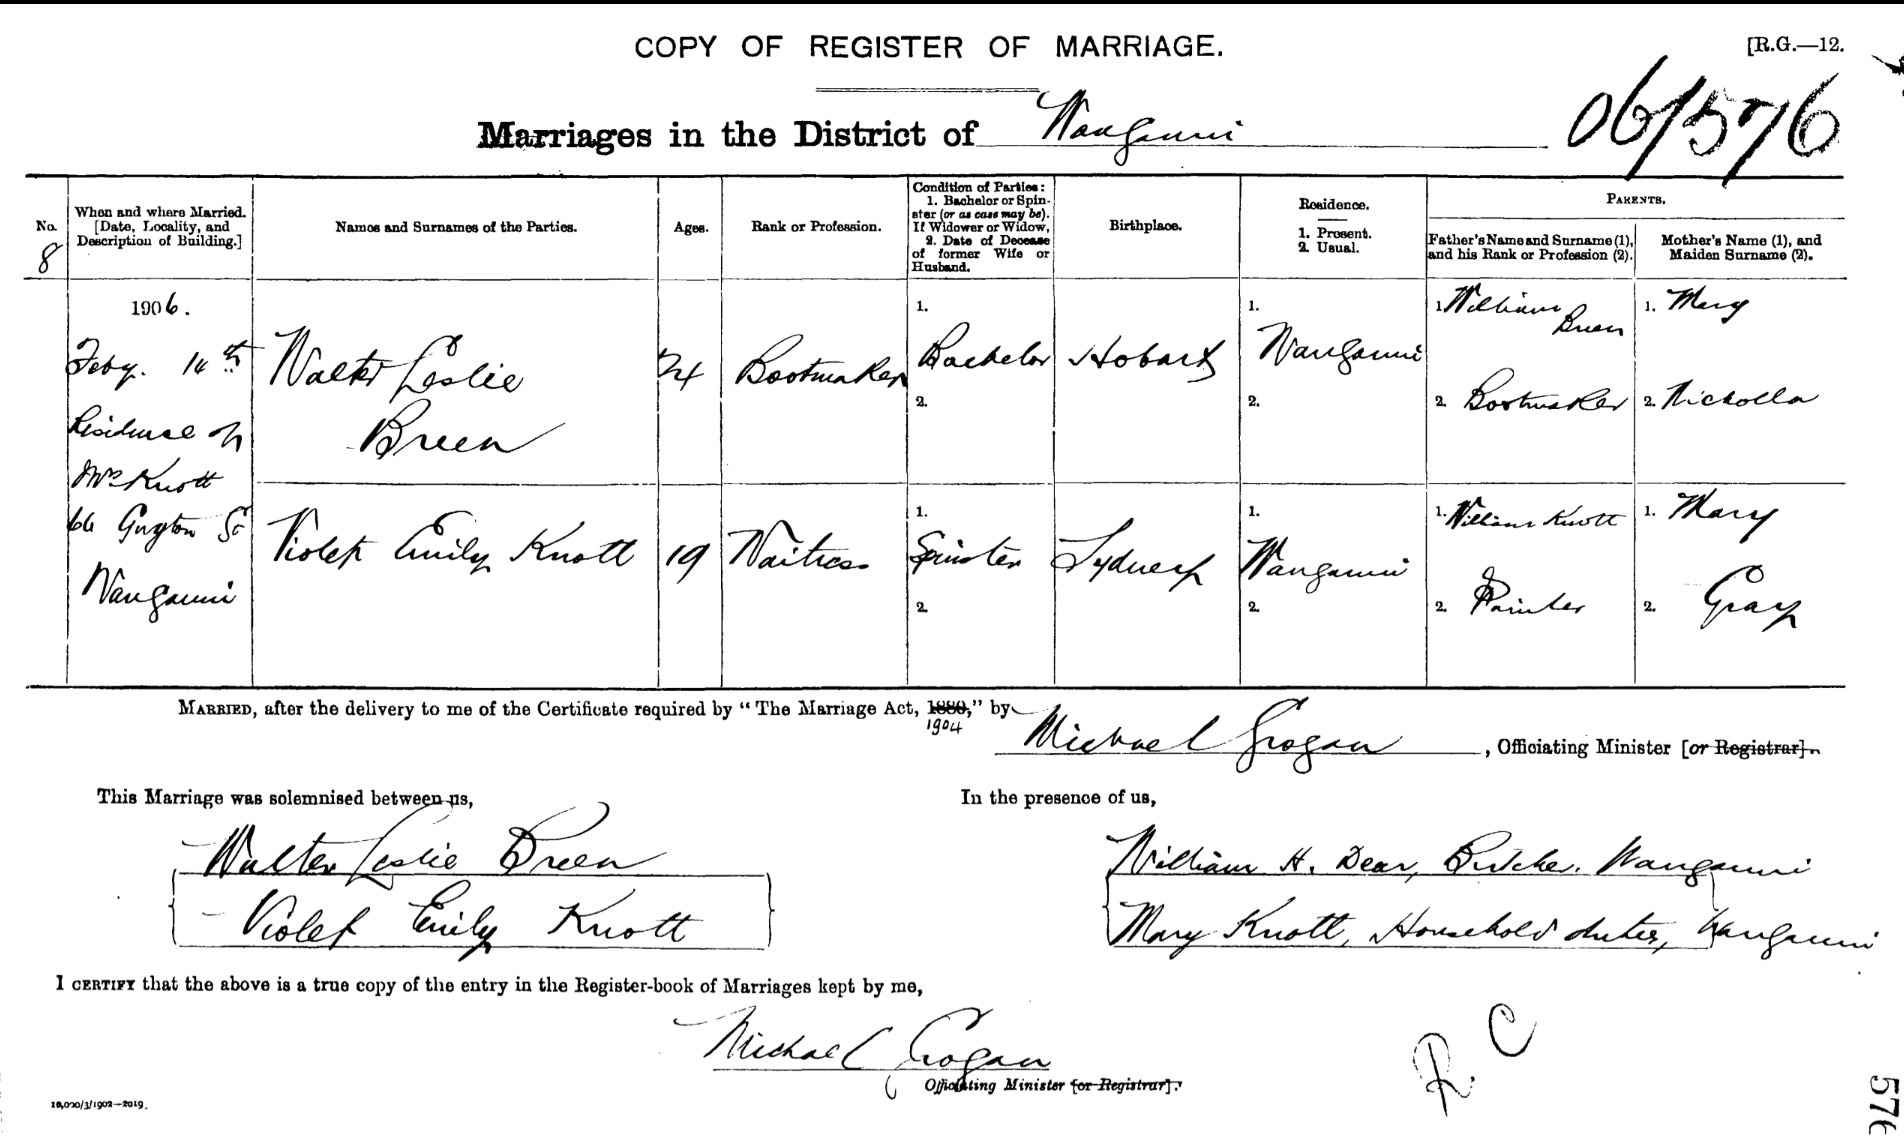 Walter & Violet Breen marriage license